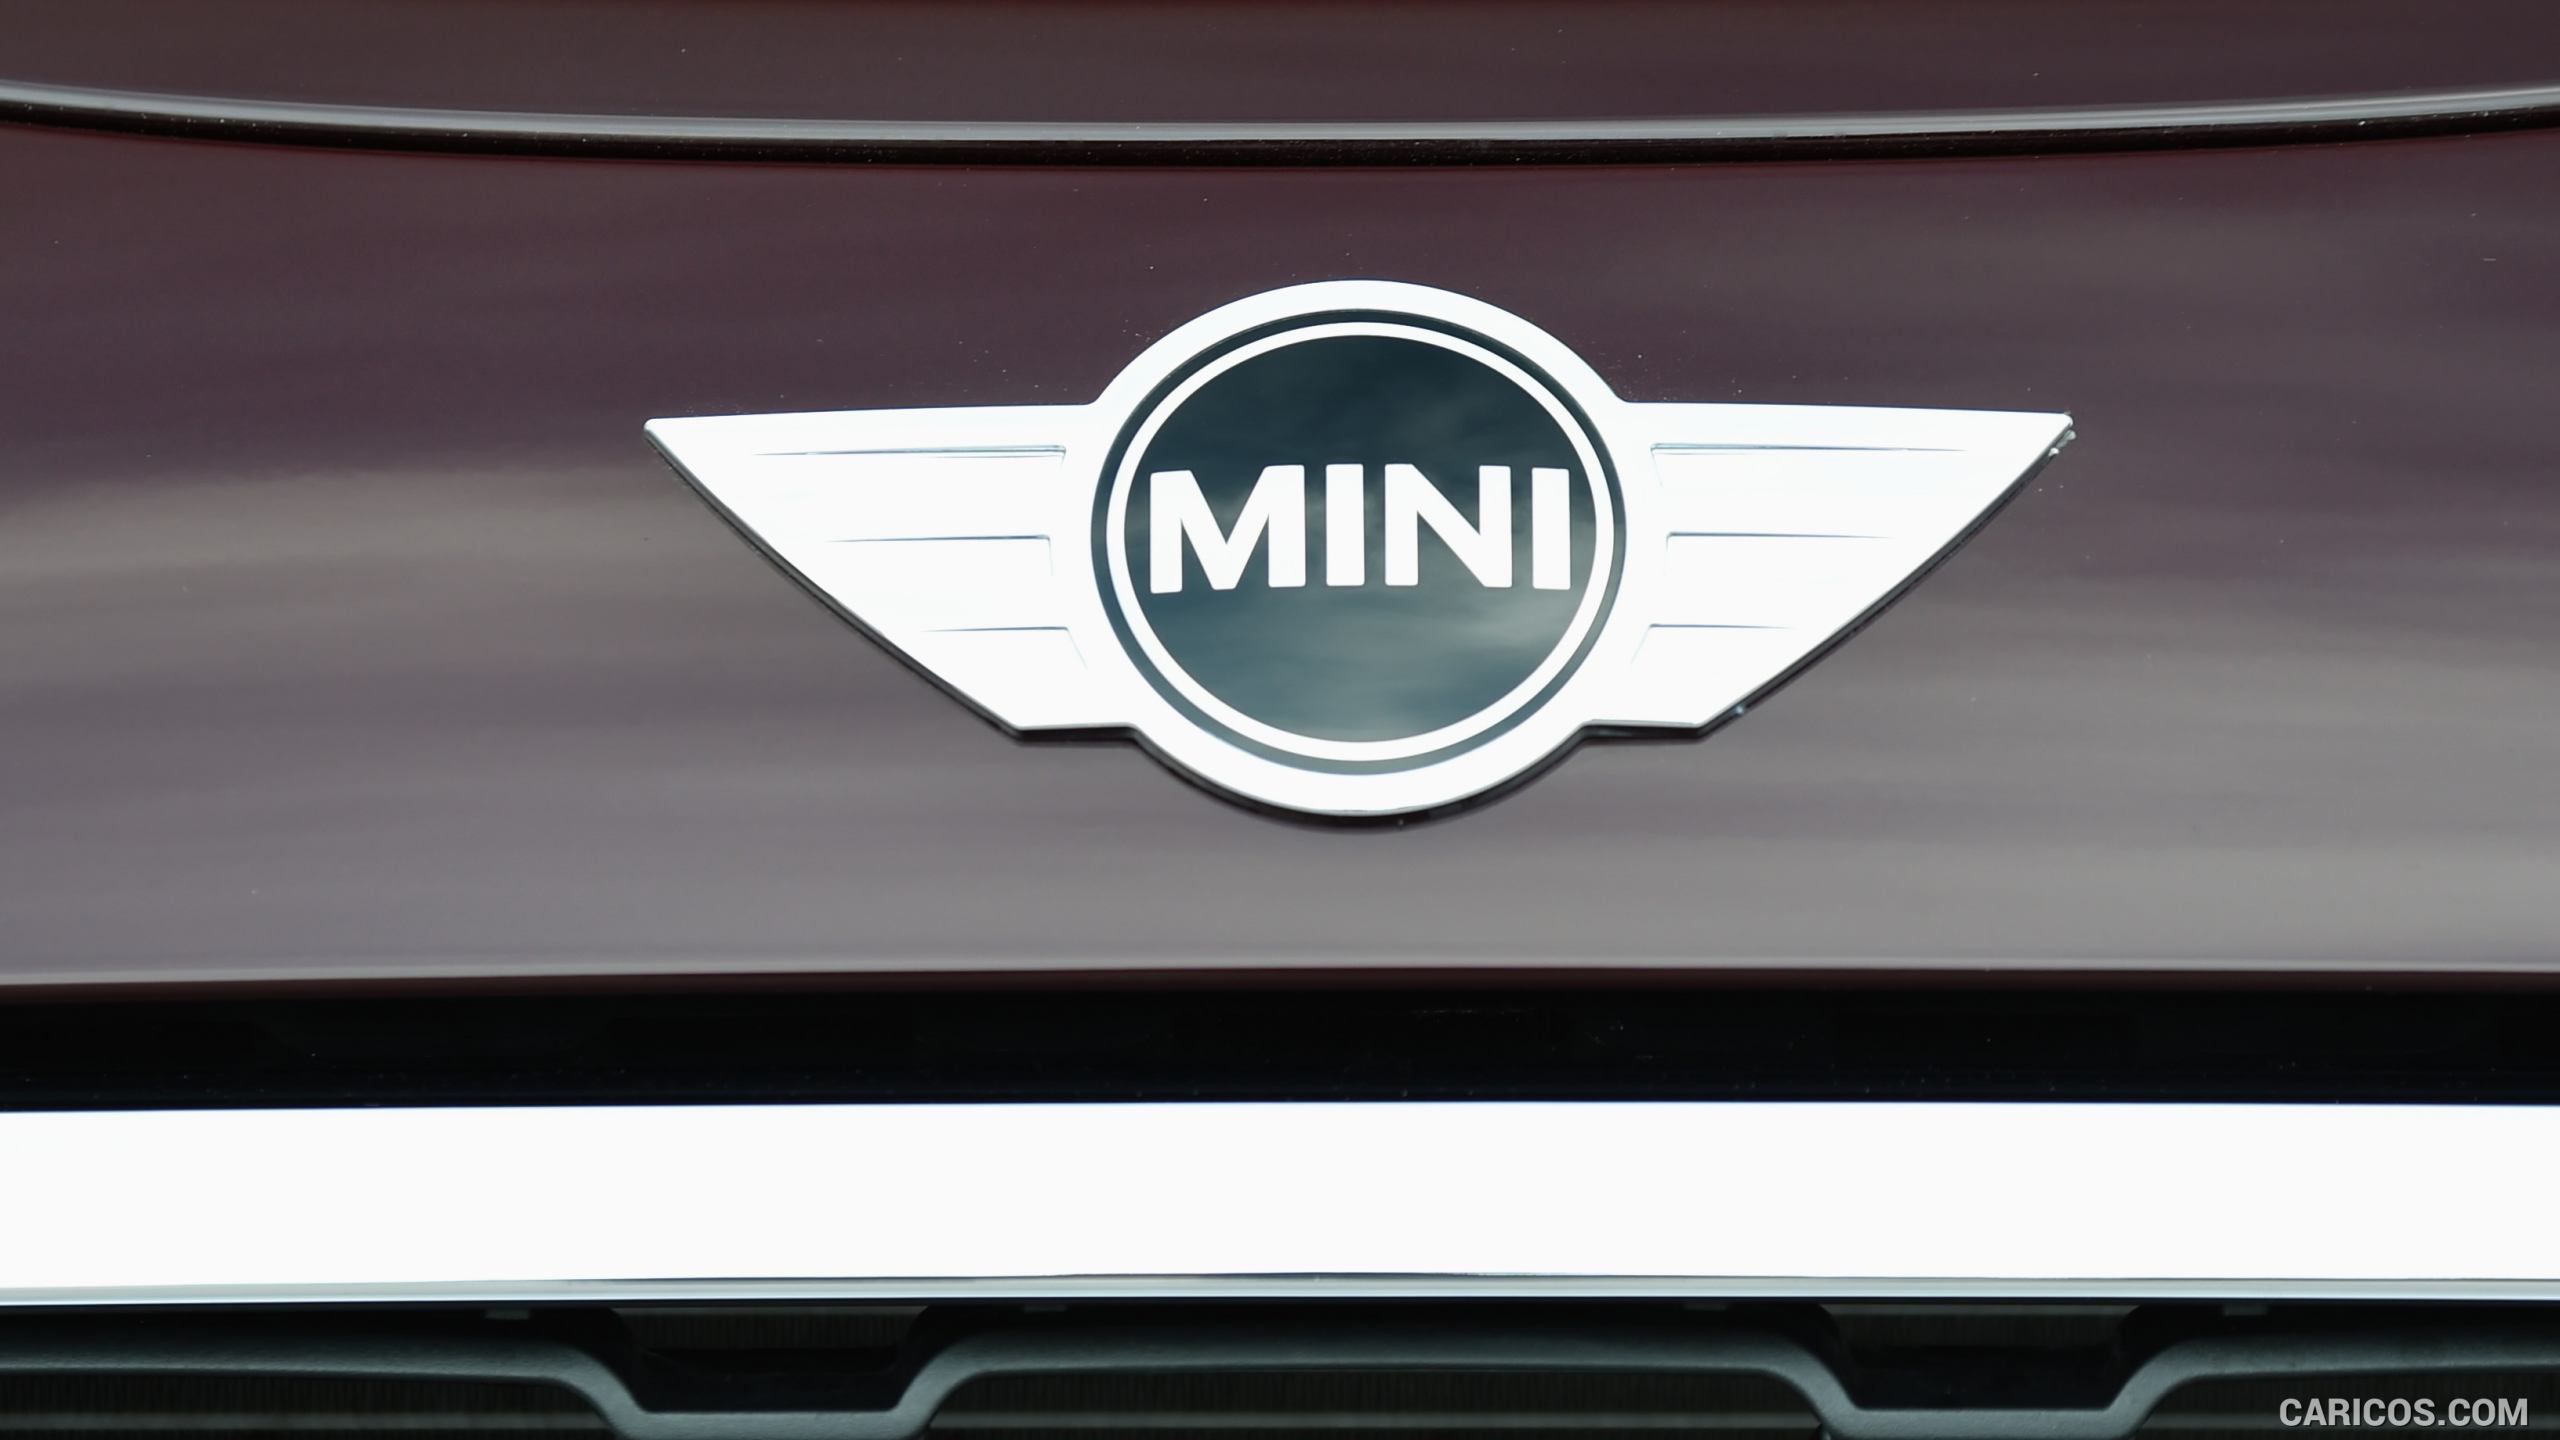 2016 MINI Cooper S Clubman in Metallic Pure Burgundy - Badge, #341 of 380